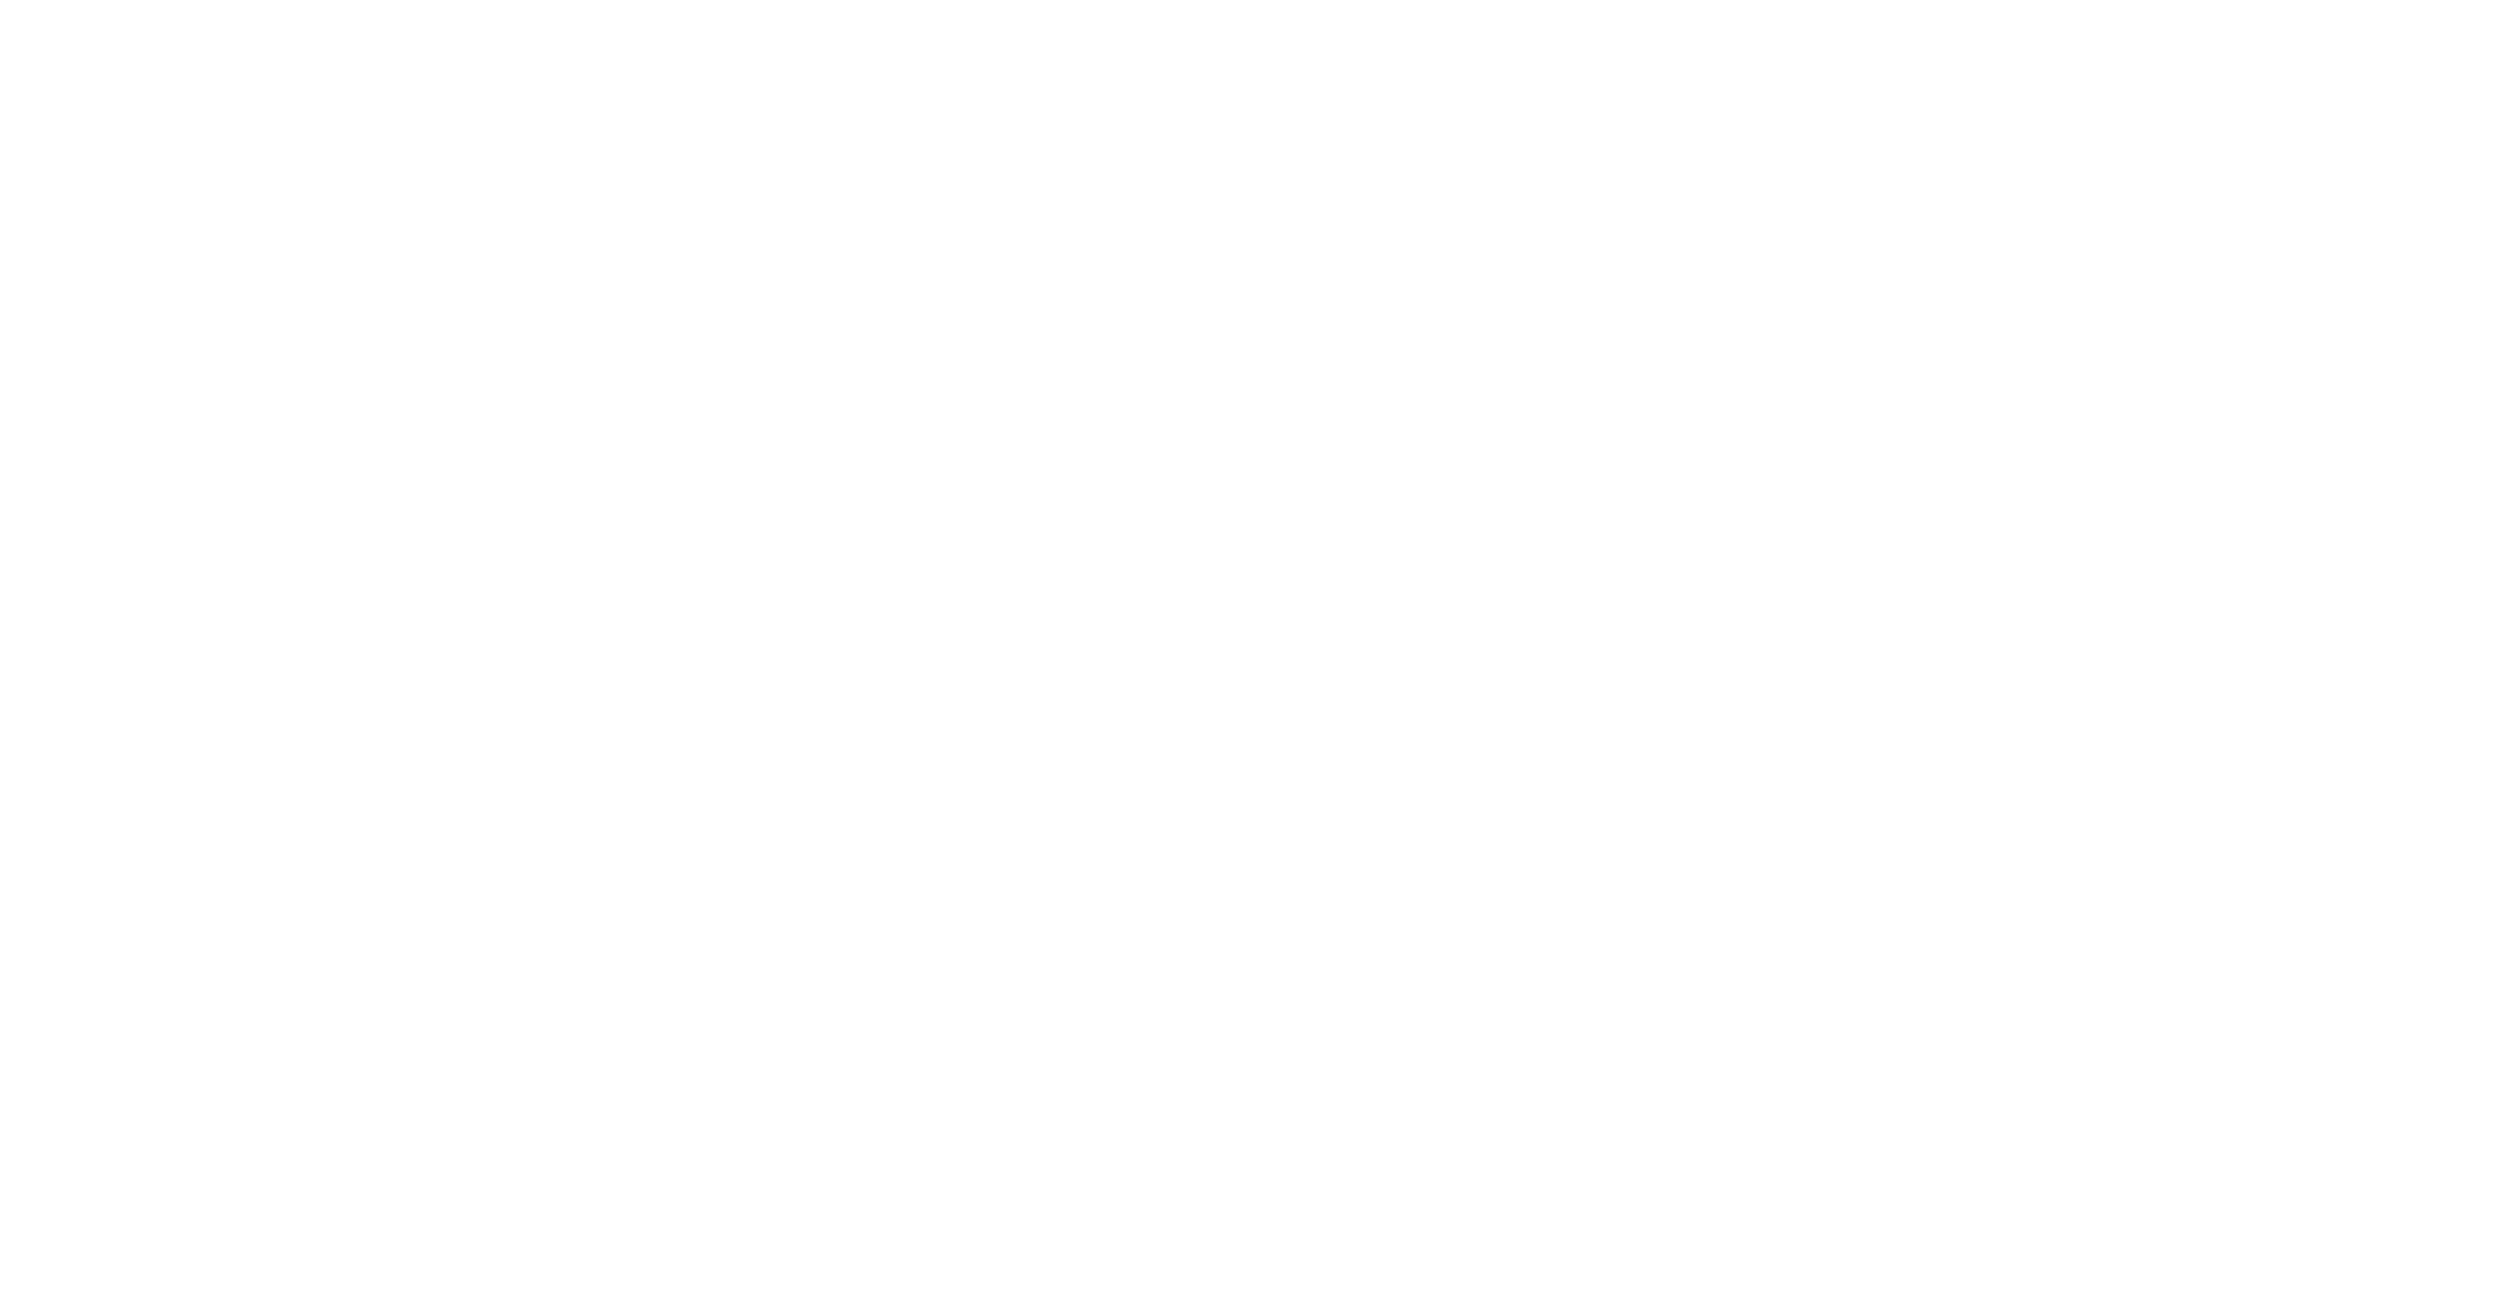 Four Seasons Preferred Partner.png